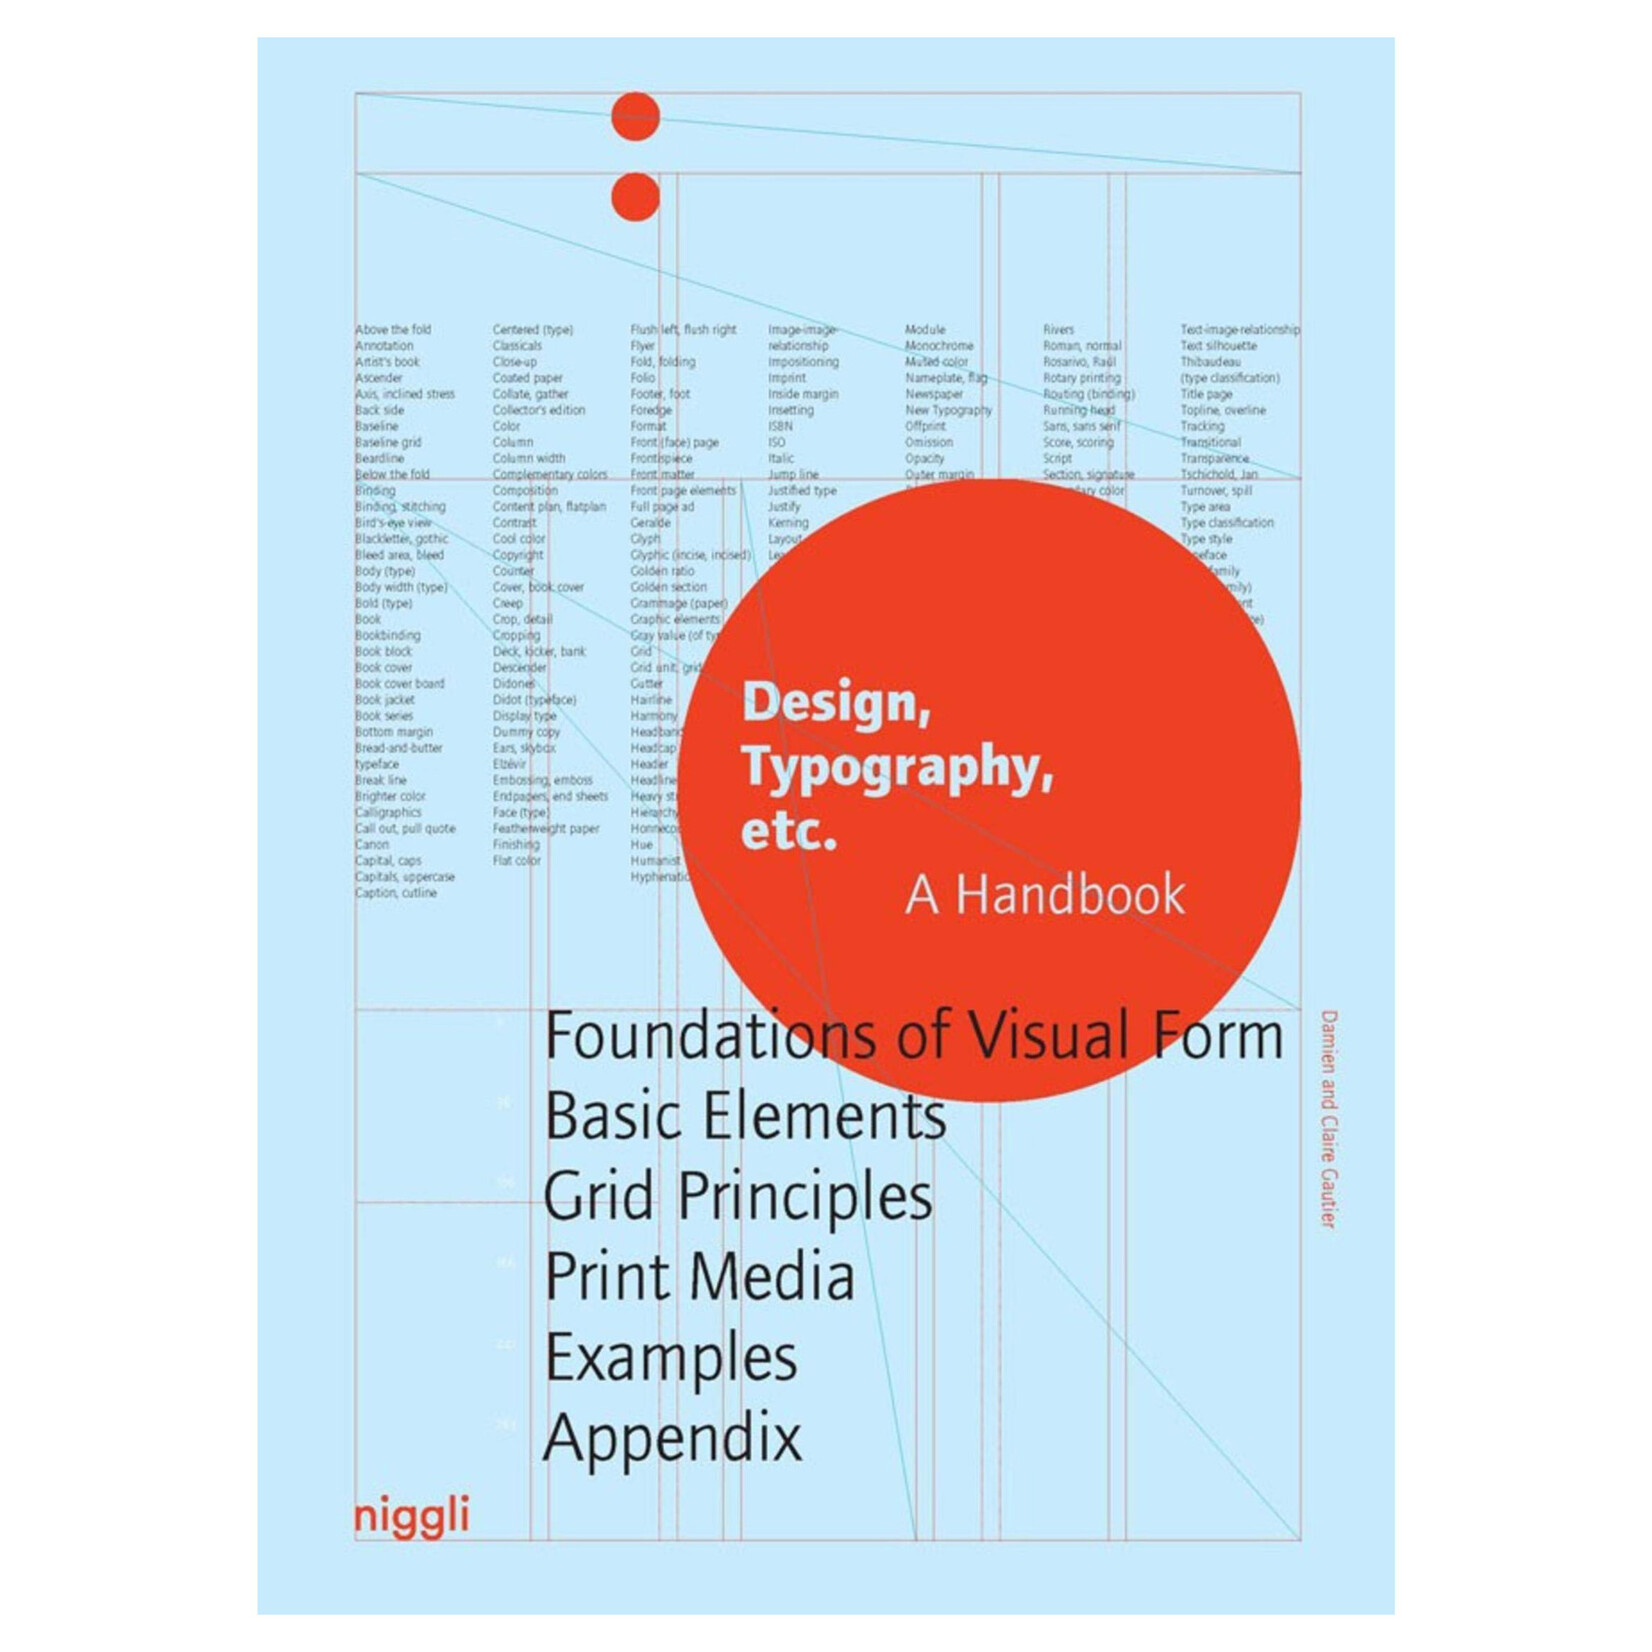 Design, Typography, etc.: A Handbook